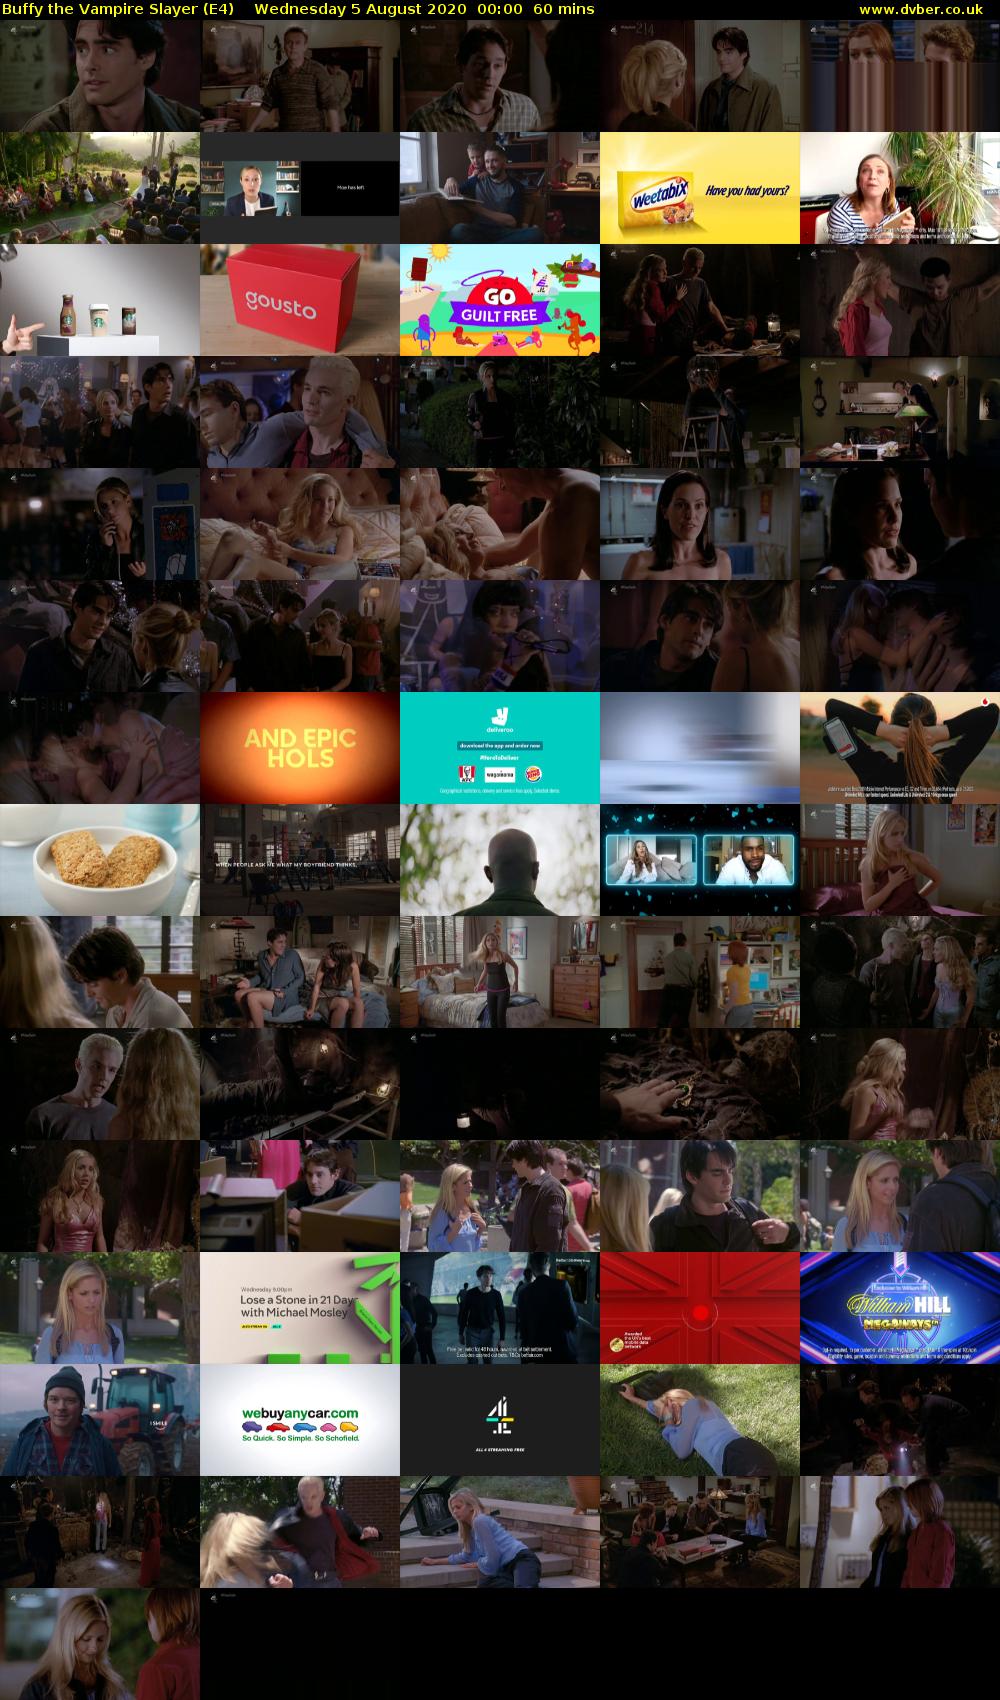 Buffy the Vampire Slayer (E4) Wednesday 5 August 2020 00:00 - 01:00